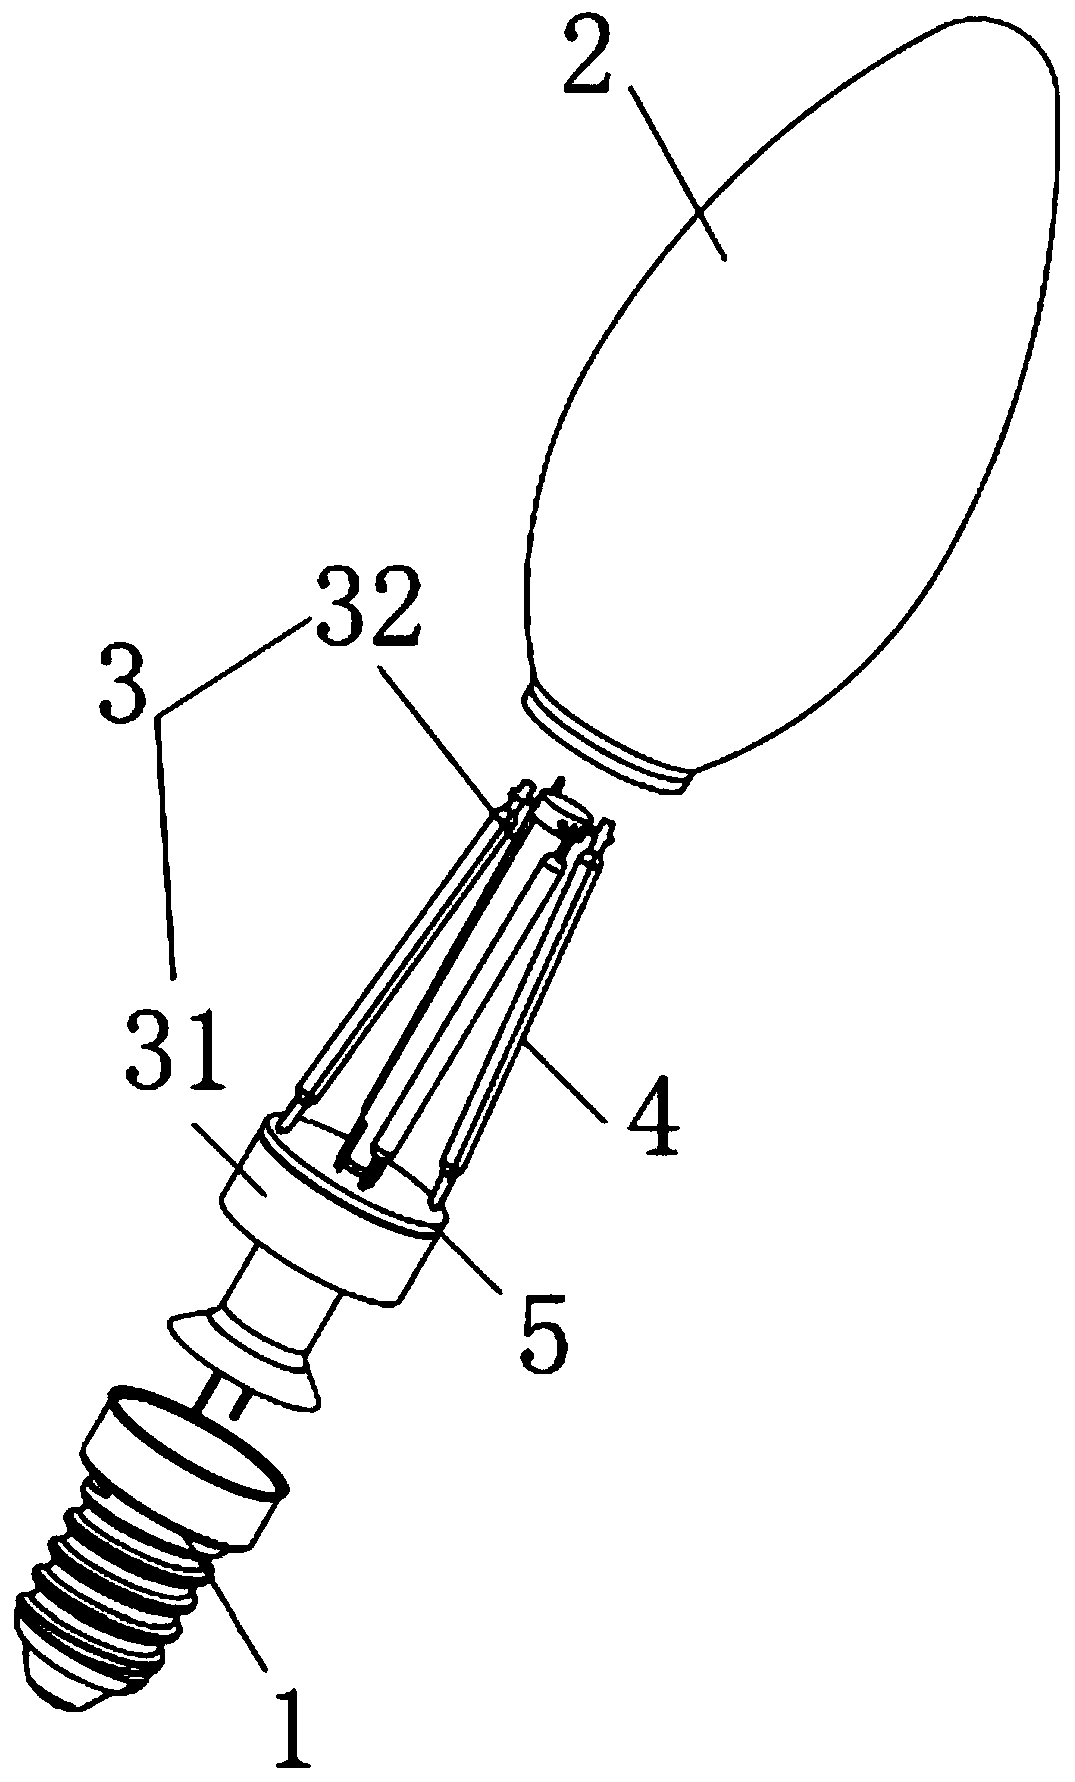 LED filament light bulb